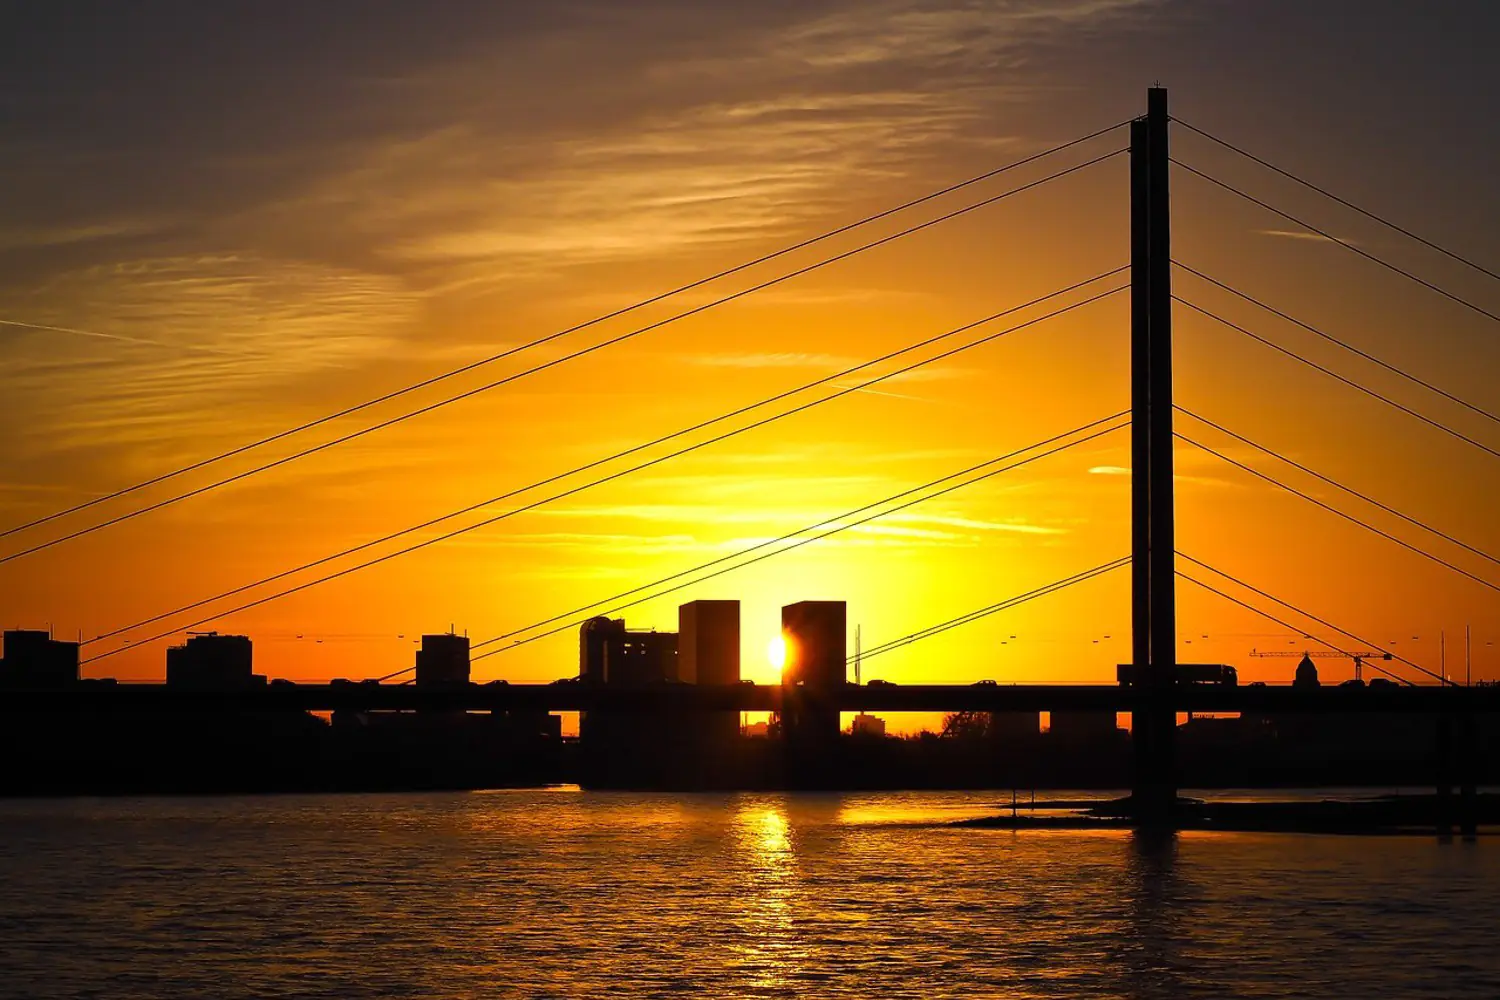 Papier peint photo Skyline Dusseldorf au coucher du soleil